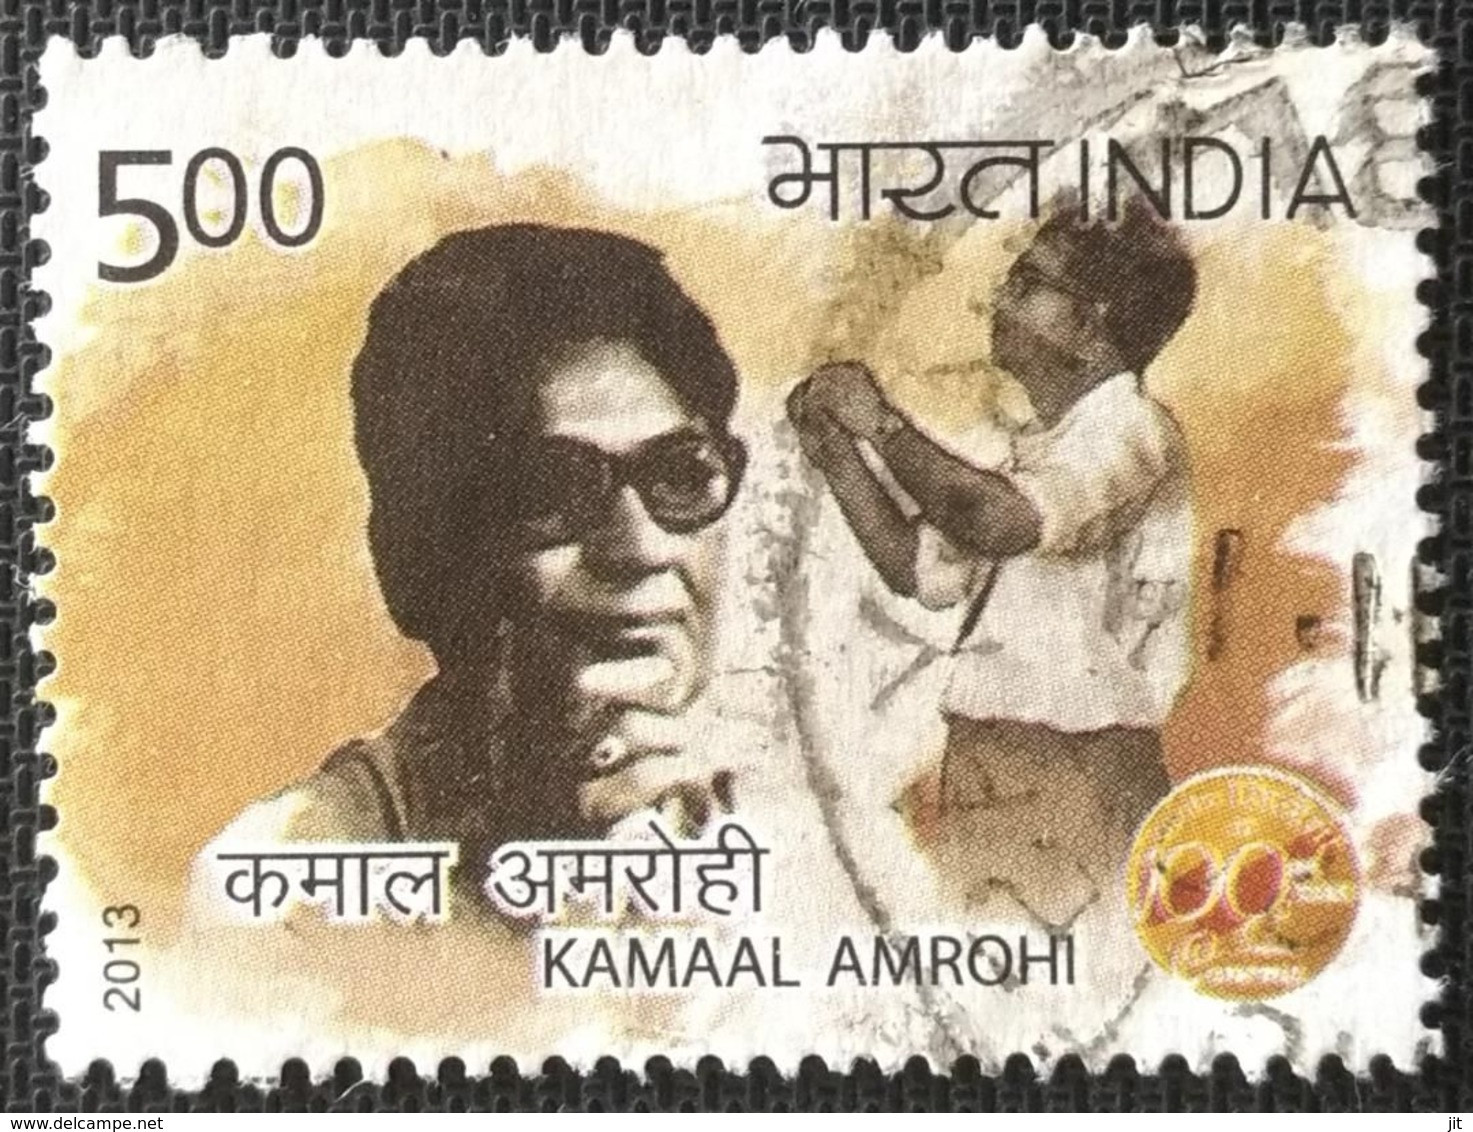 022. INDIA 2013 USED STAMP 100 YEARS OF INDIAN CINEMA (KAMAAL AMROHI) - Usati